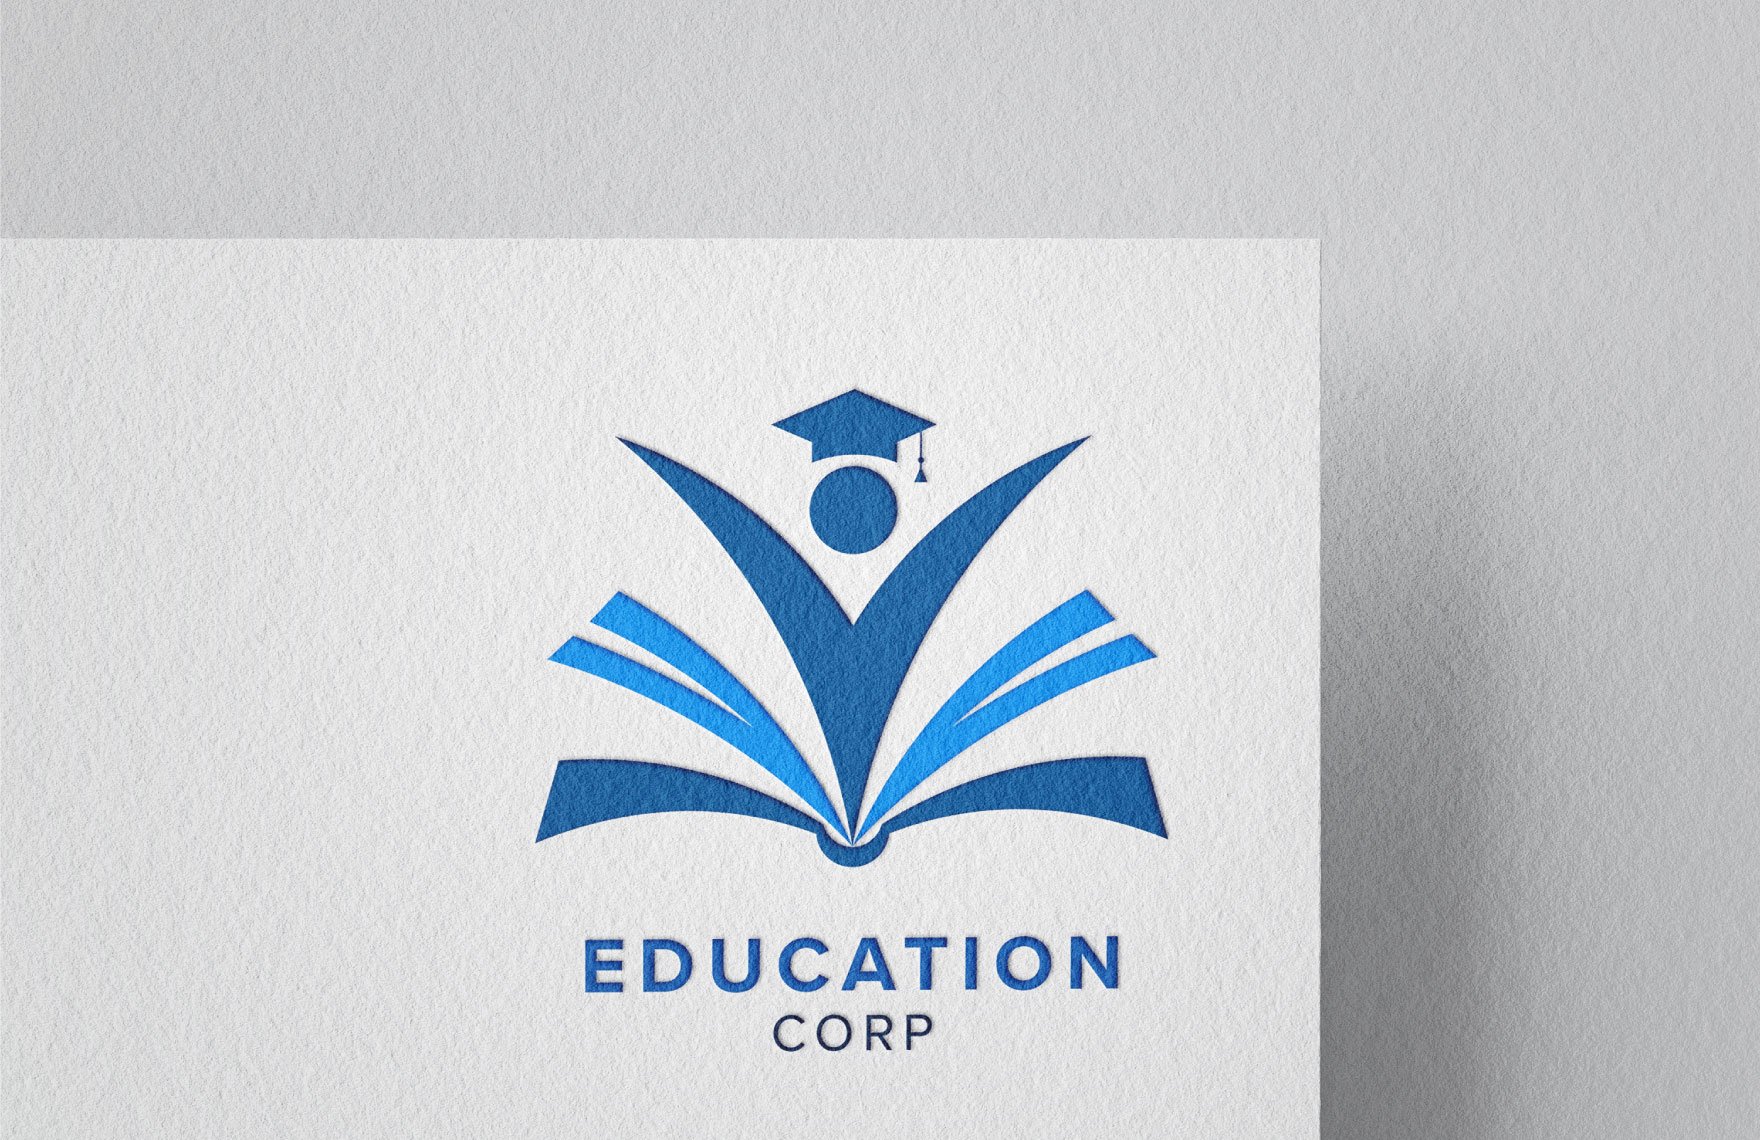 Secondary Education Logo Template